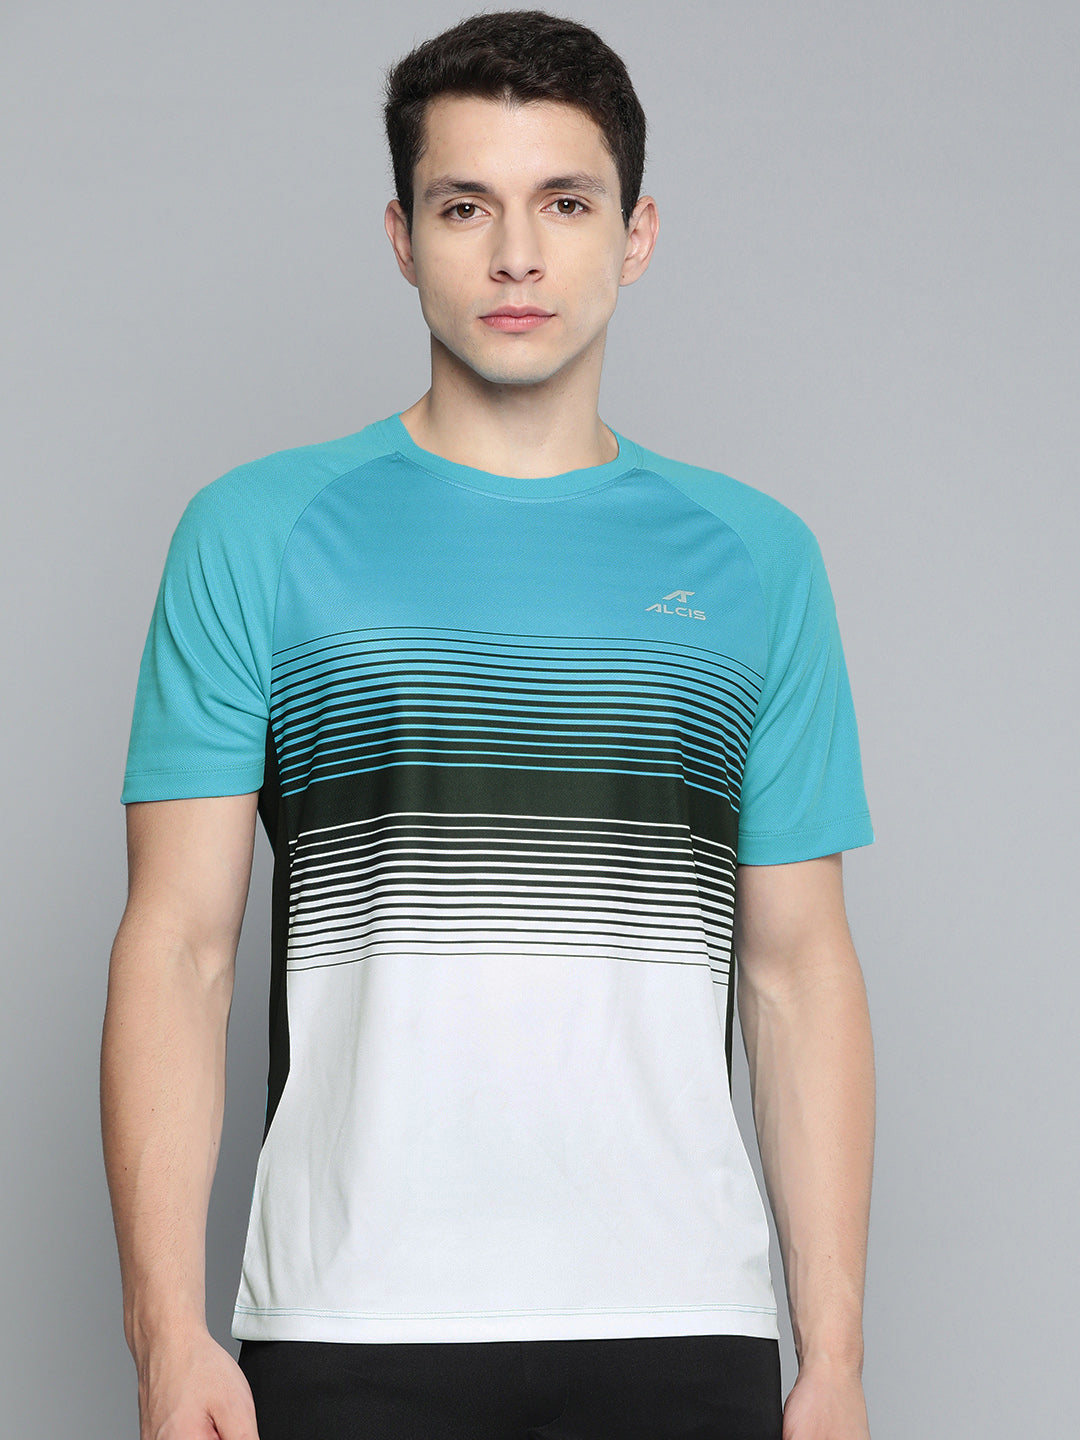 Alcis Men Striped Dry Tech Slim Fit T-shirt